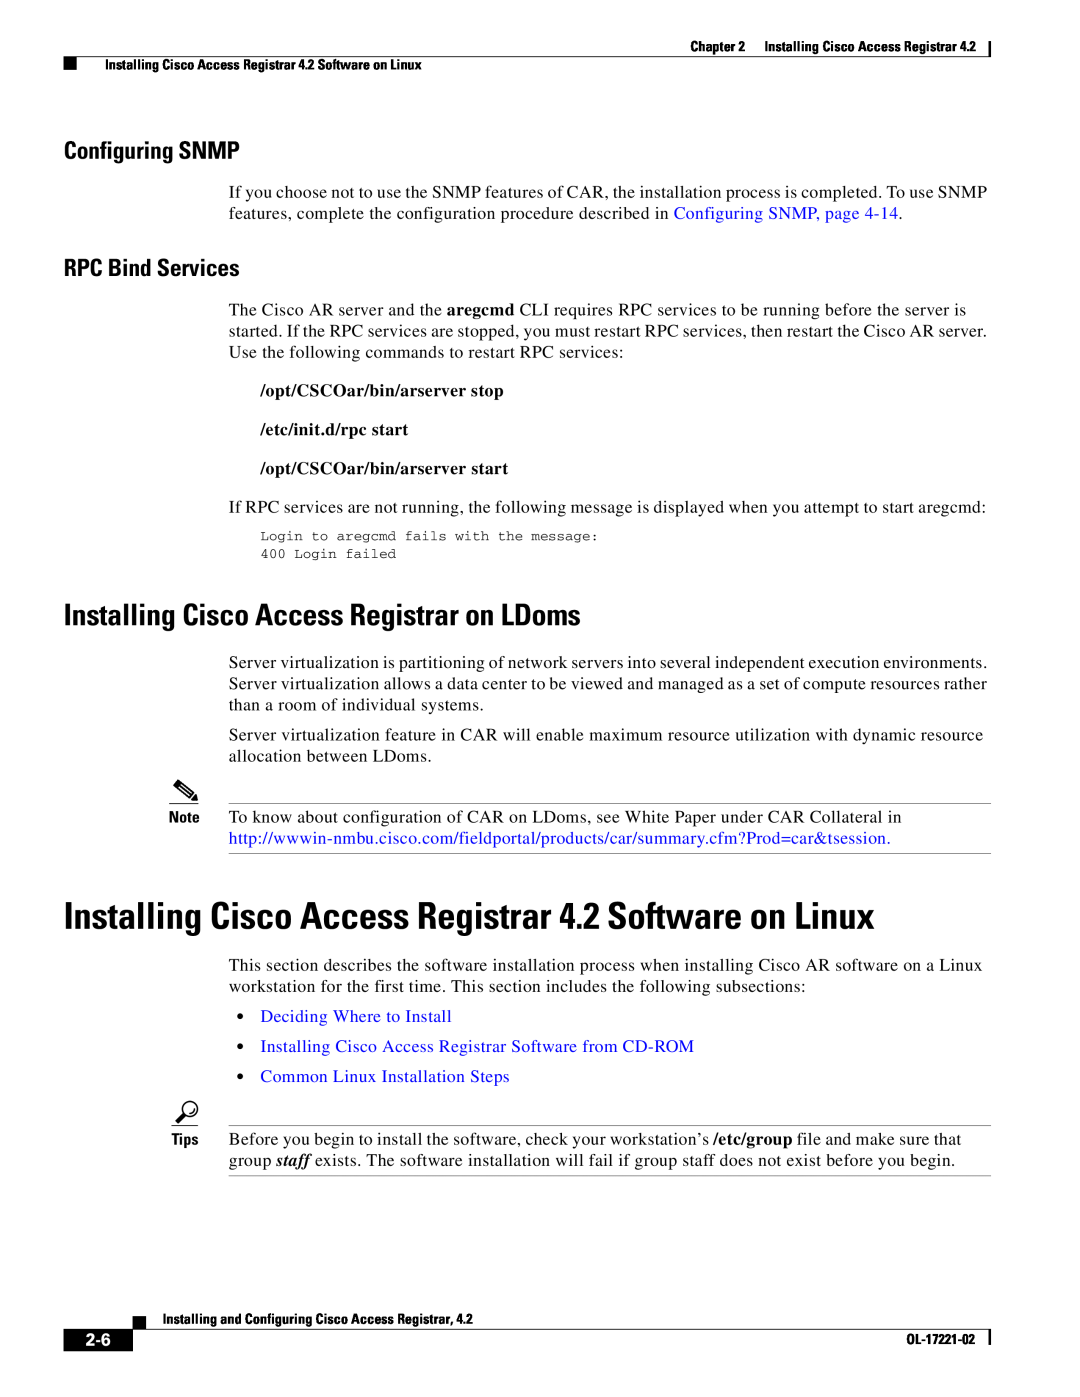 Cisco Systems manual Installing Cisco Access Registrar 4.2 Software on Linux, Installing Cisco Access Registrar on LDoms 